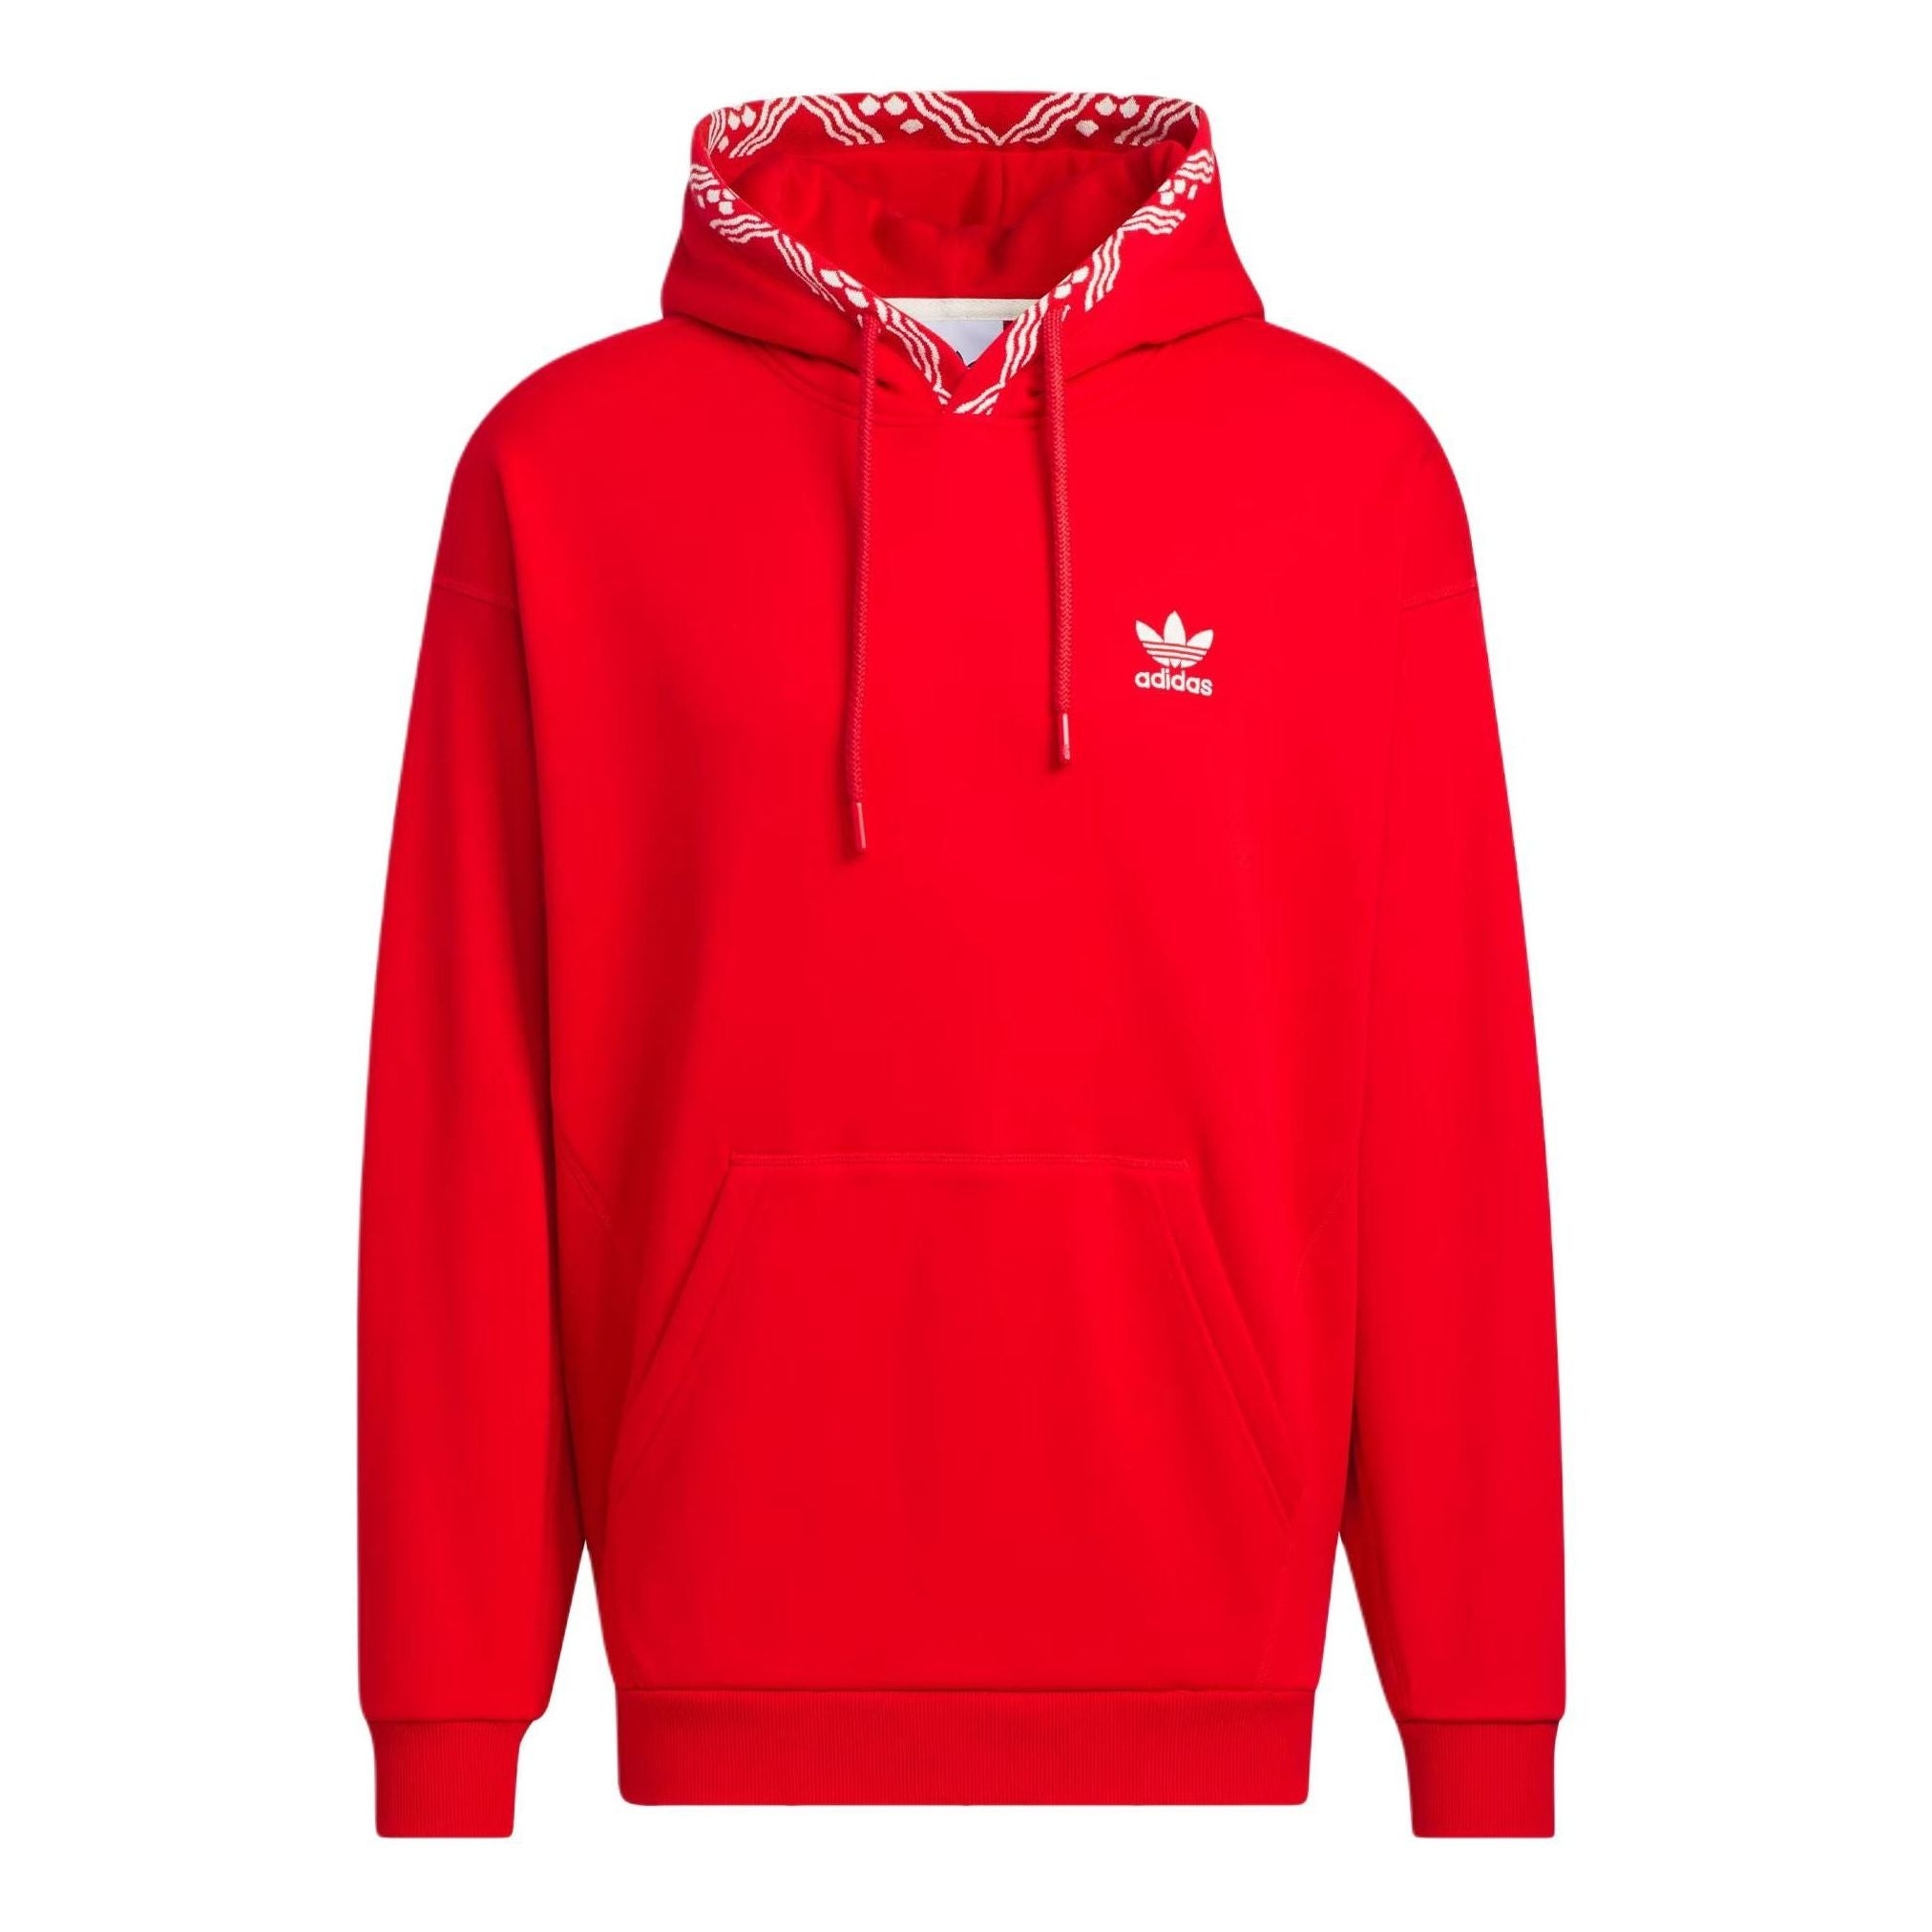 adidas Originals x Feifei Ruan Graphic Hoodies 'Red' IX4217 - 1